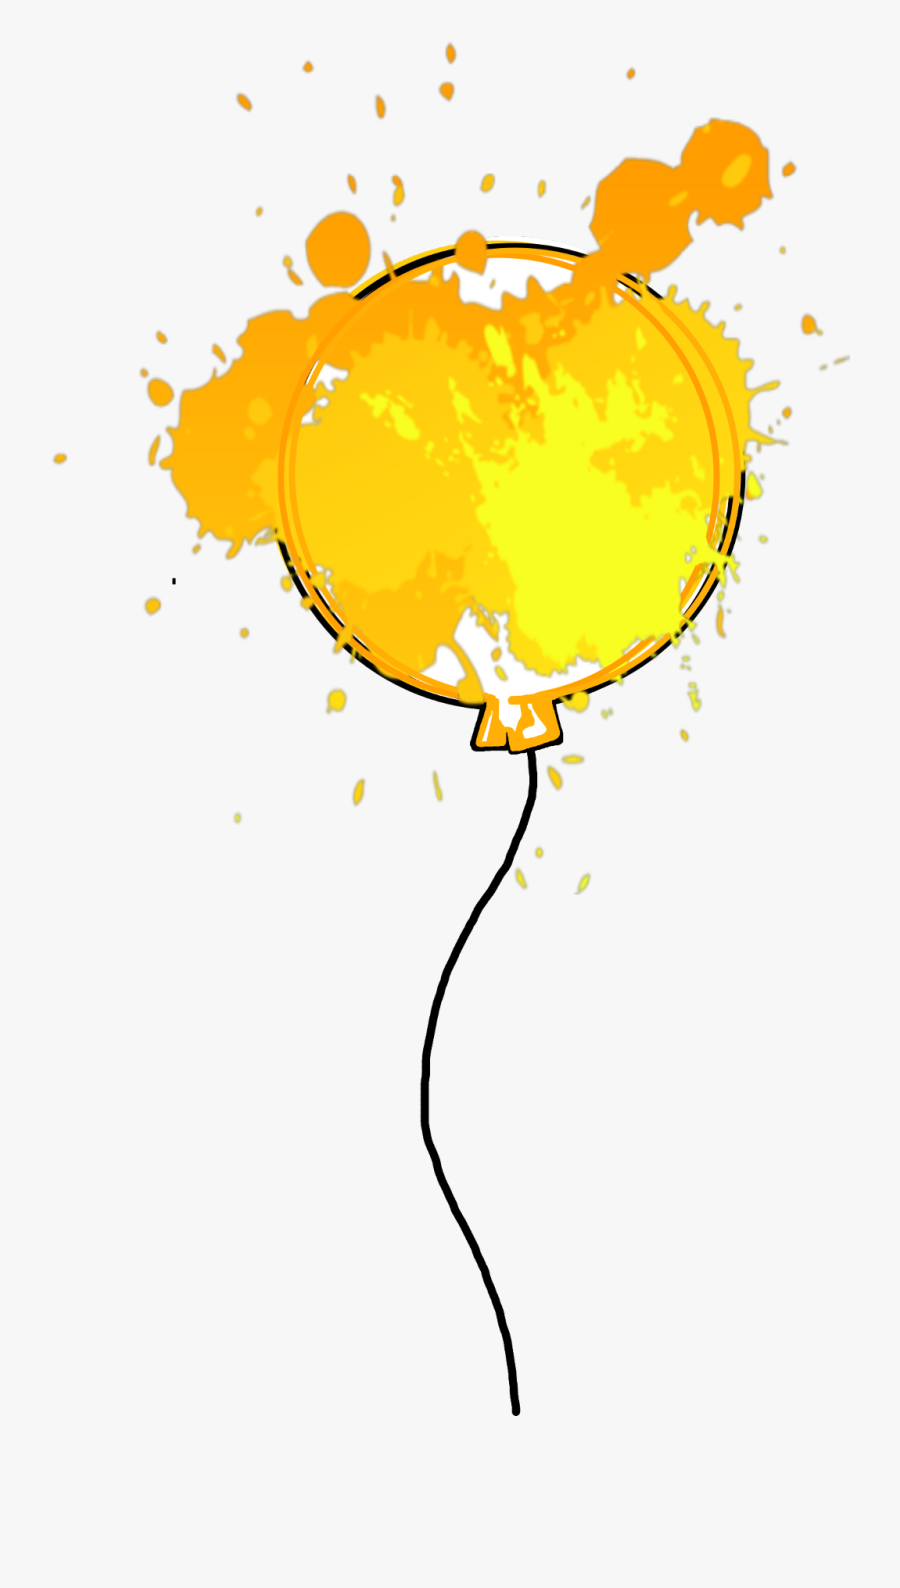 #yellow #balloon #orange #paint #splatter - Calgary Arts Academy, Transparent Clipart